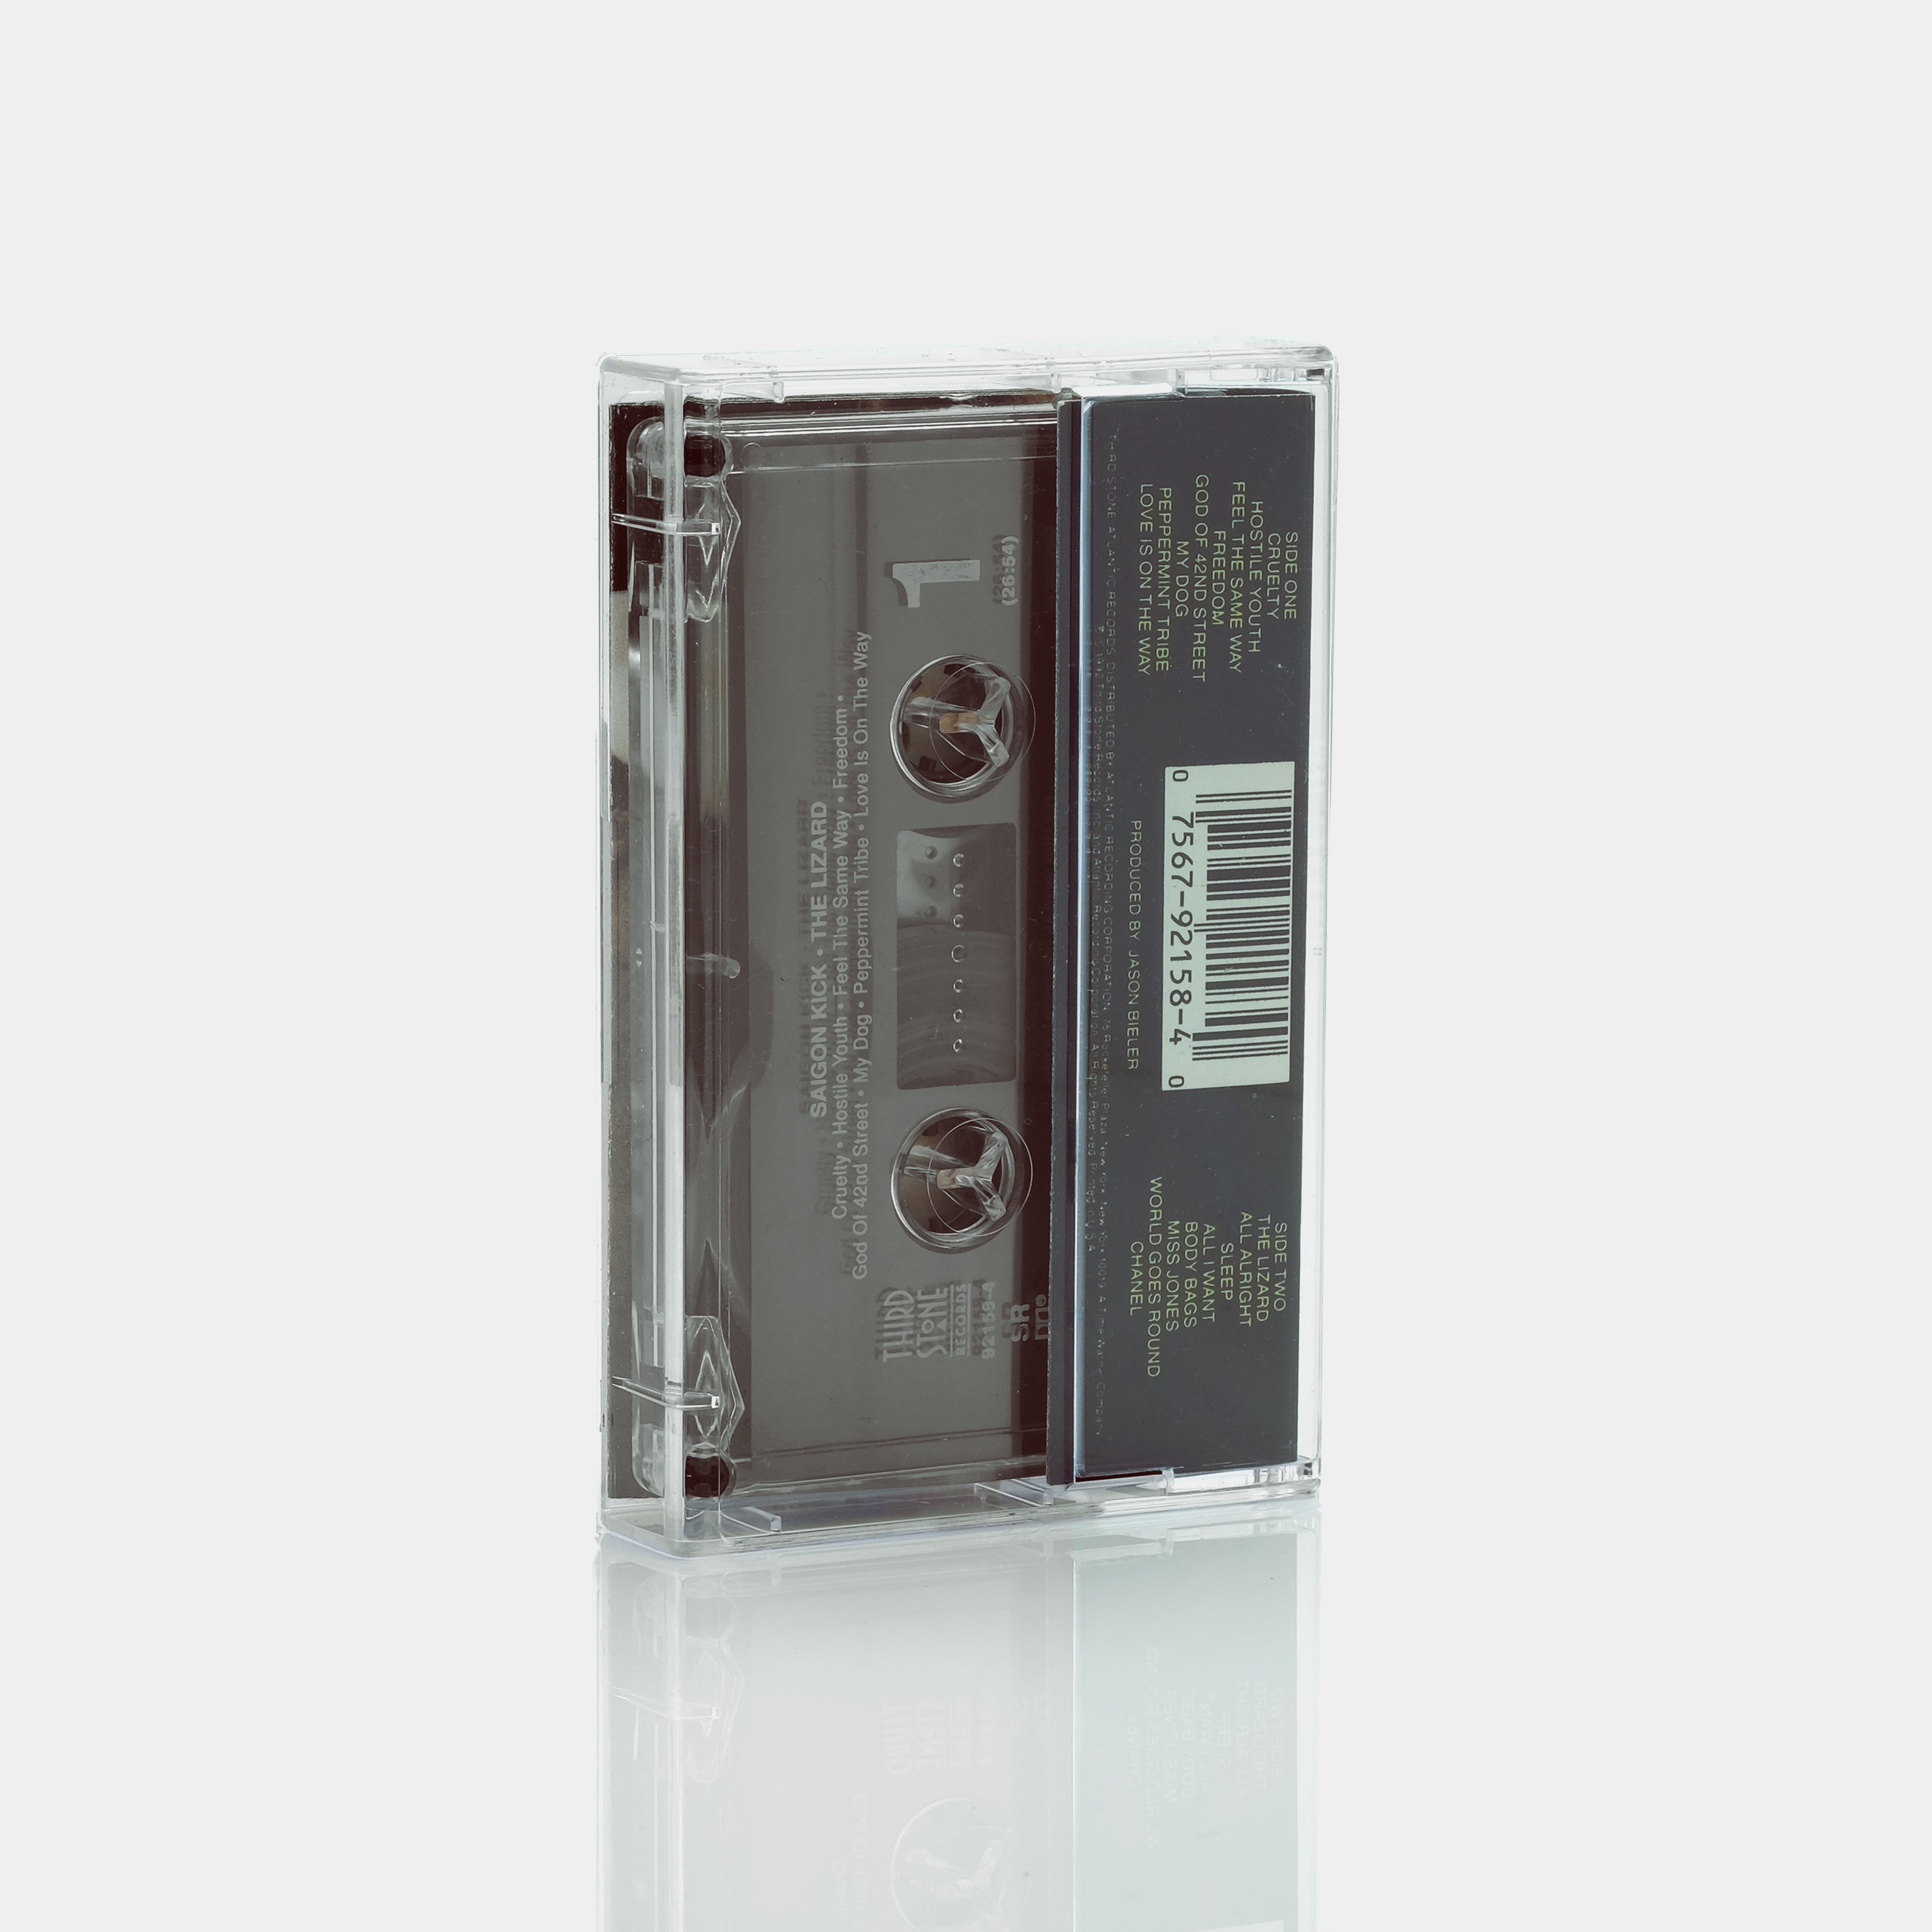 Saigon Kick - The Lizard Cassette Tape